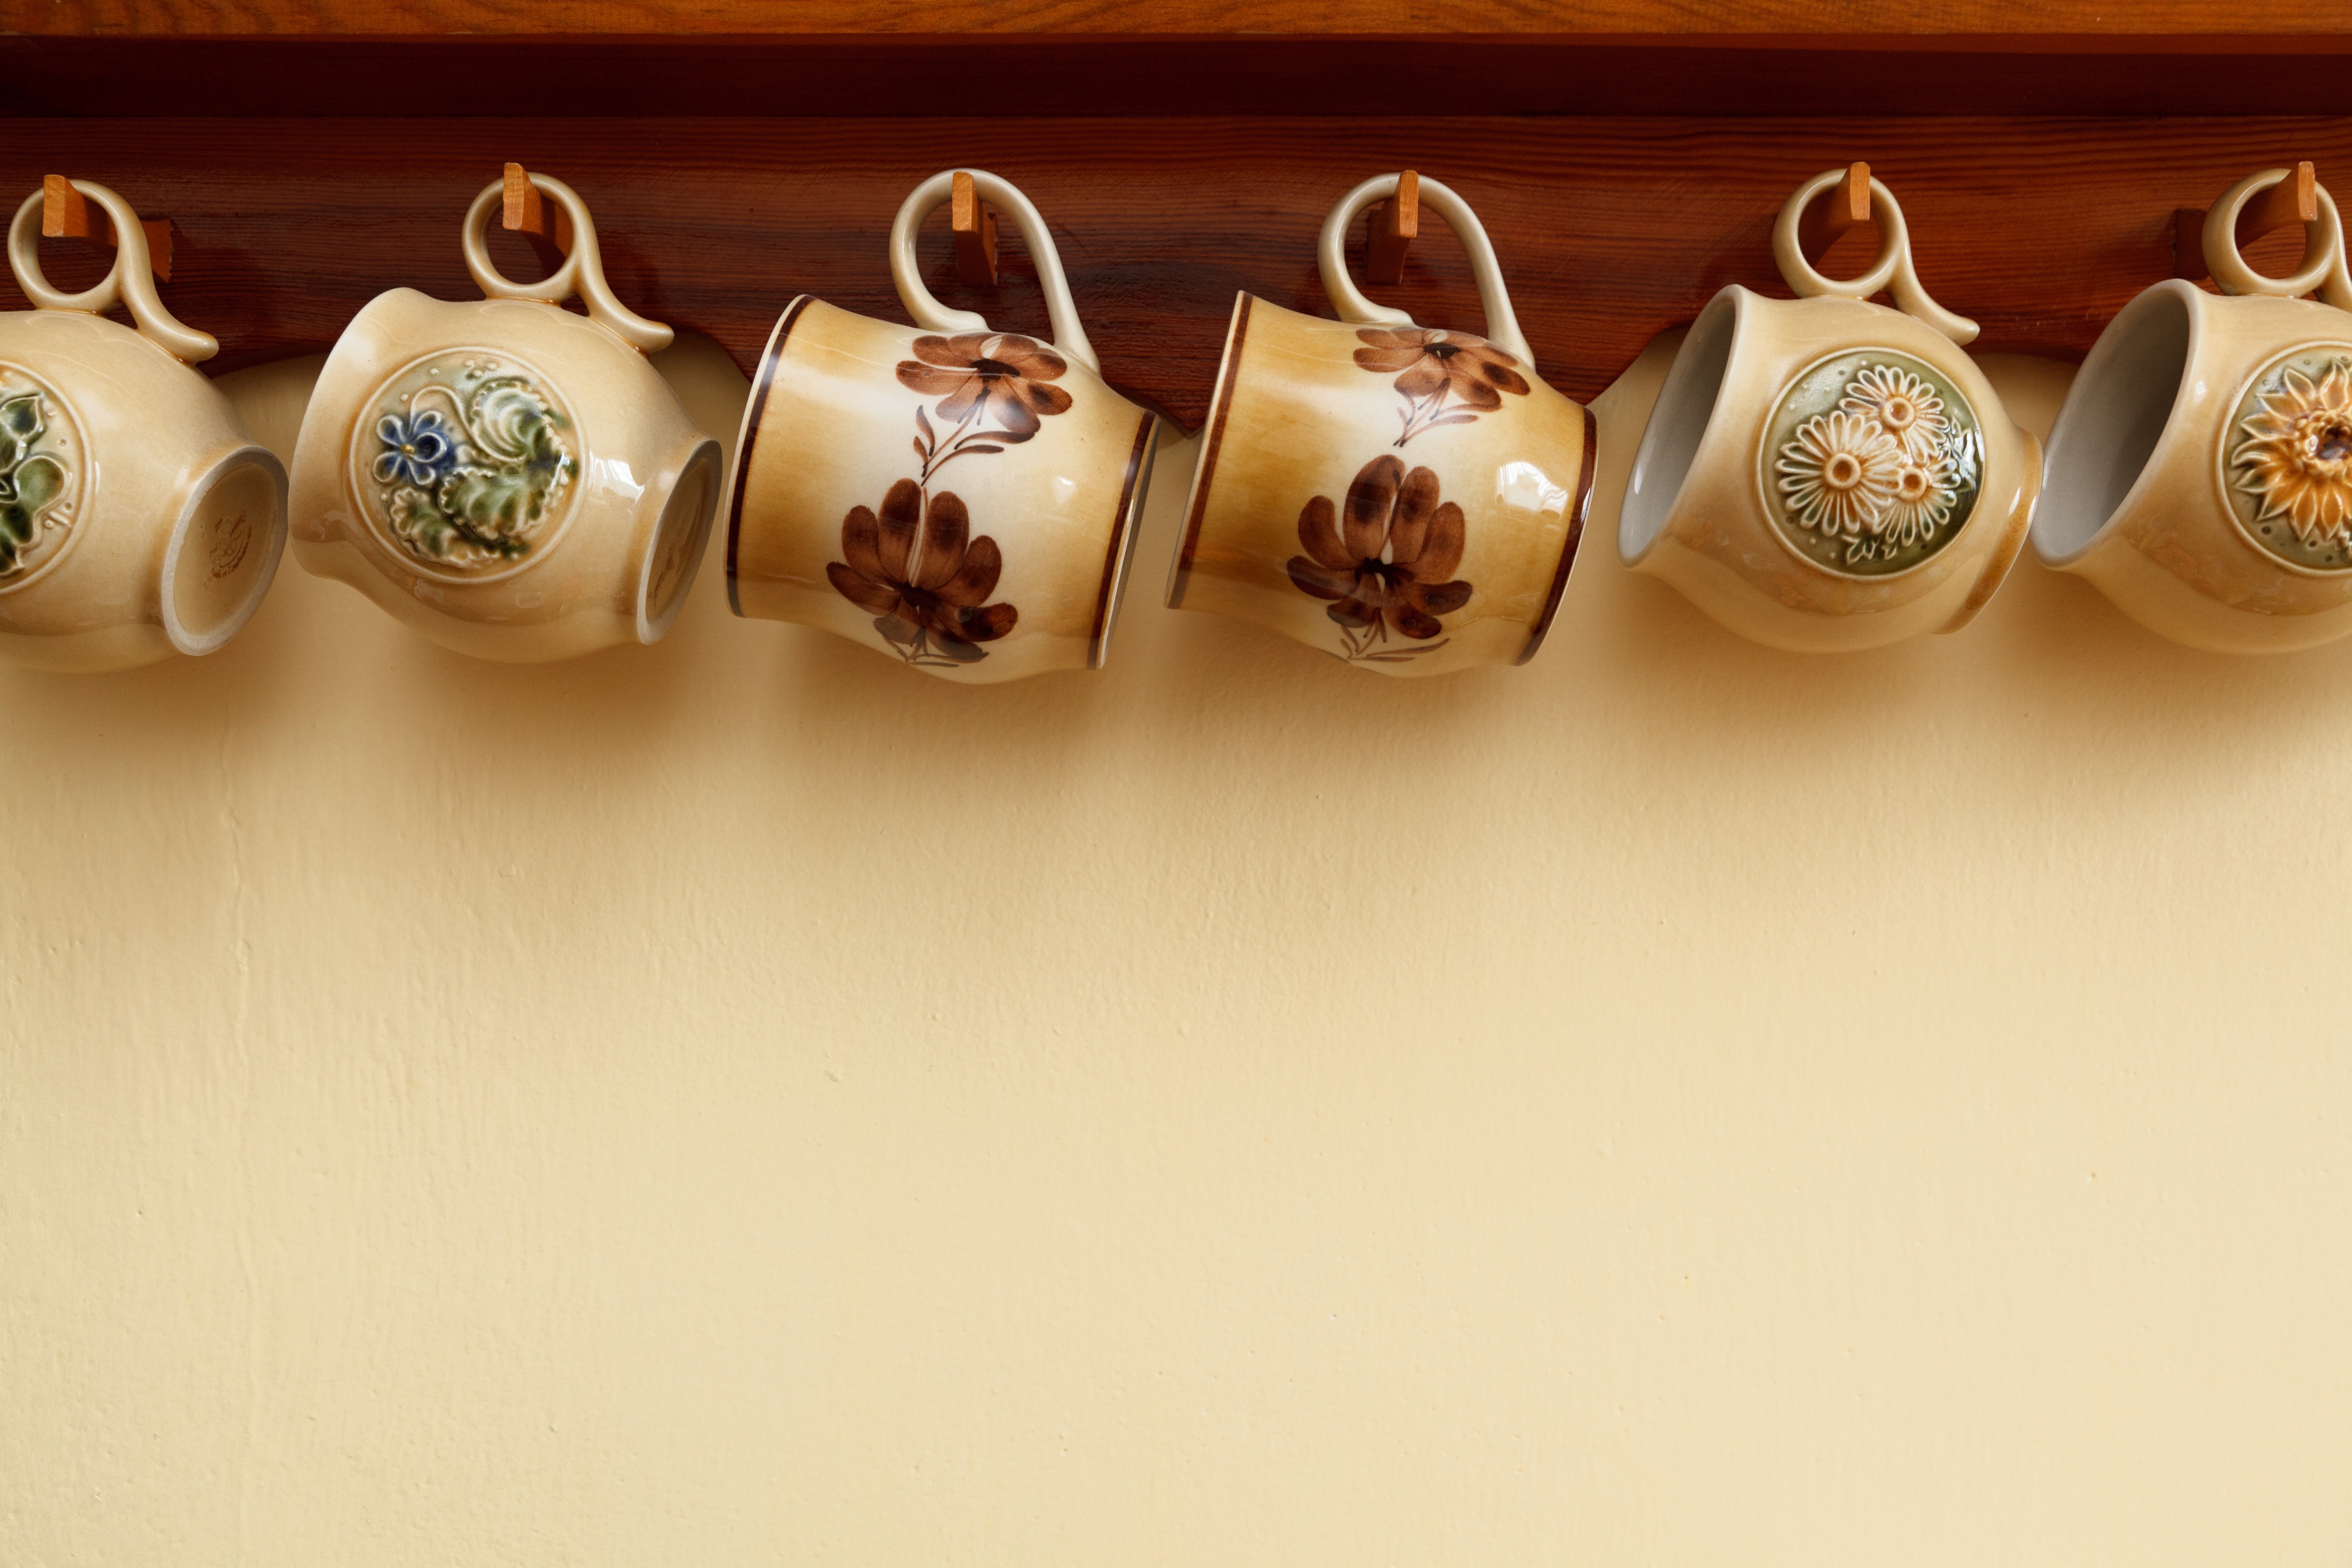 Tea mugs hung by their handles